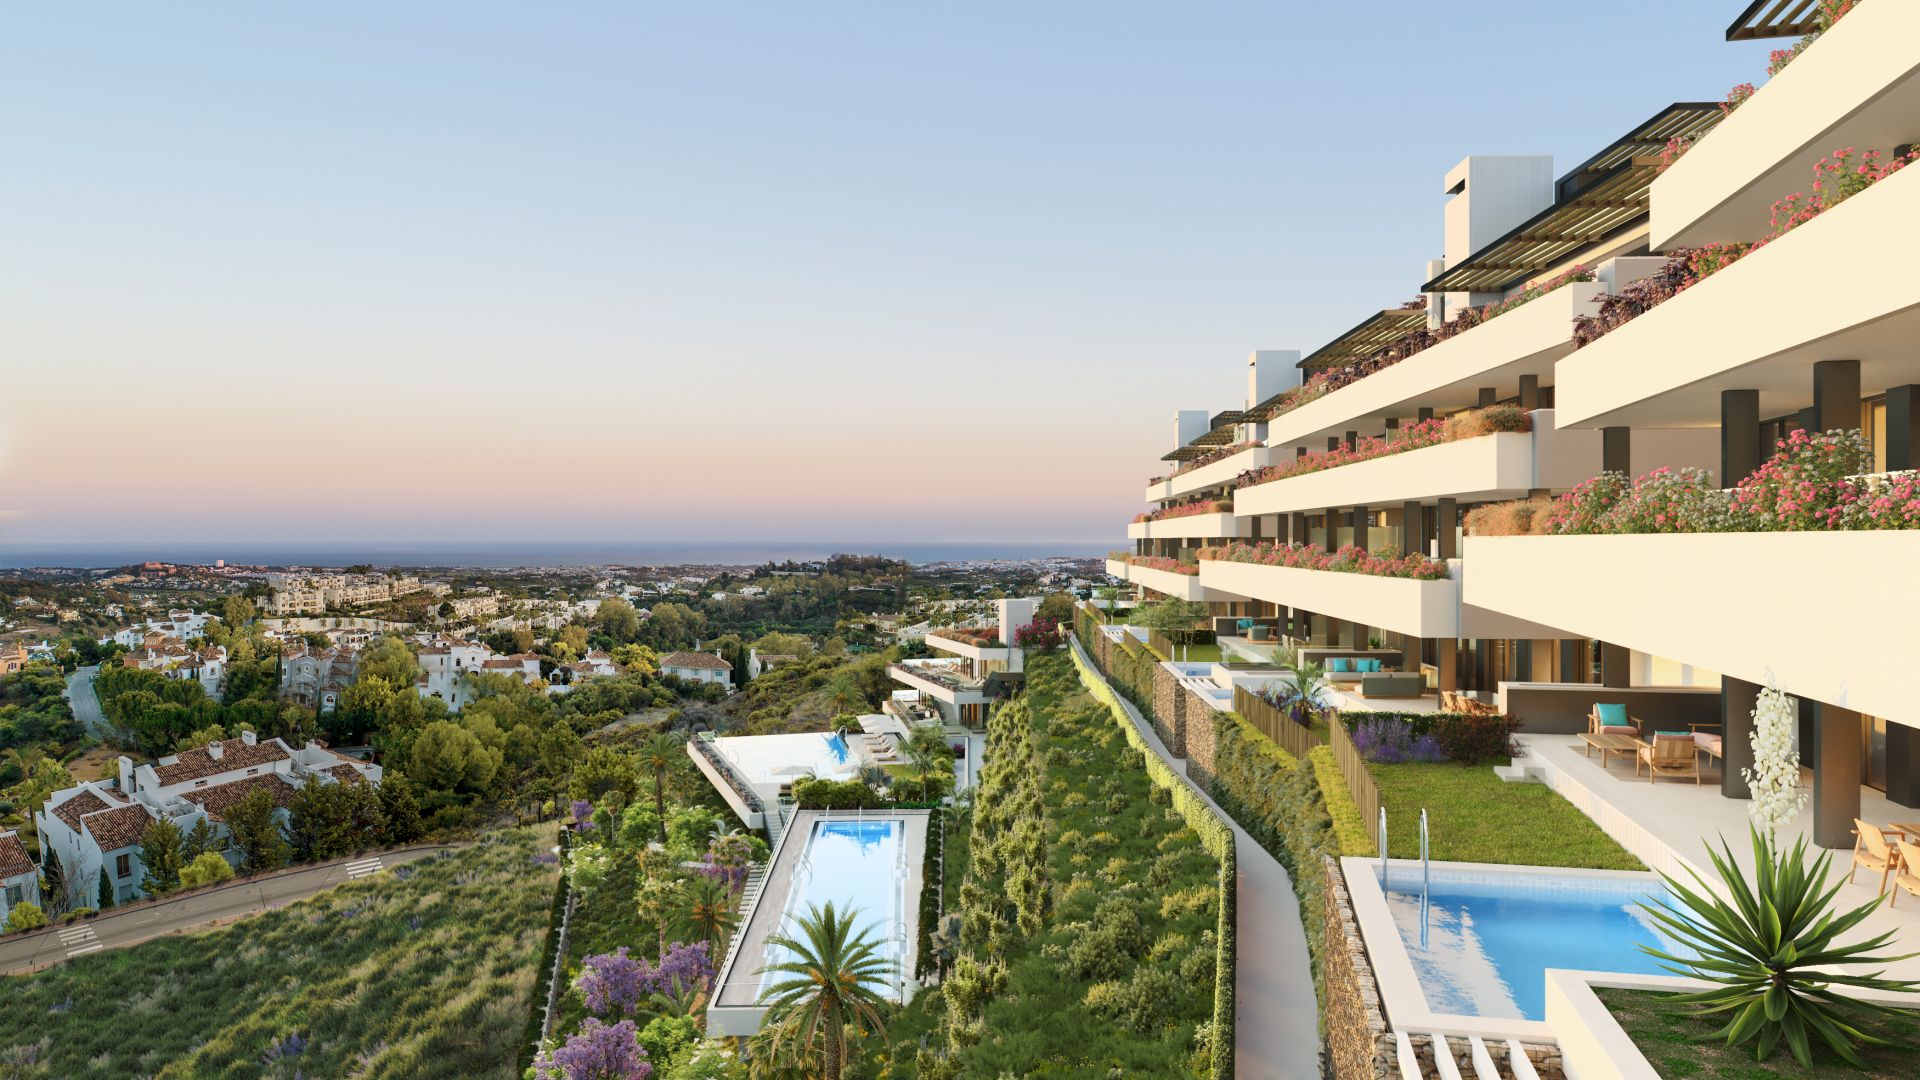 Superb new apartment complex in La Quinta with stunning views | Engel & Völkers Marbella